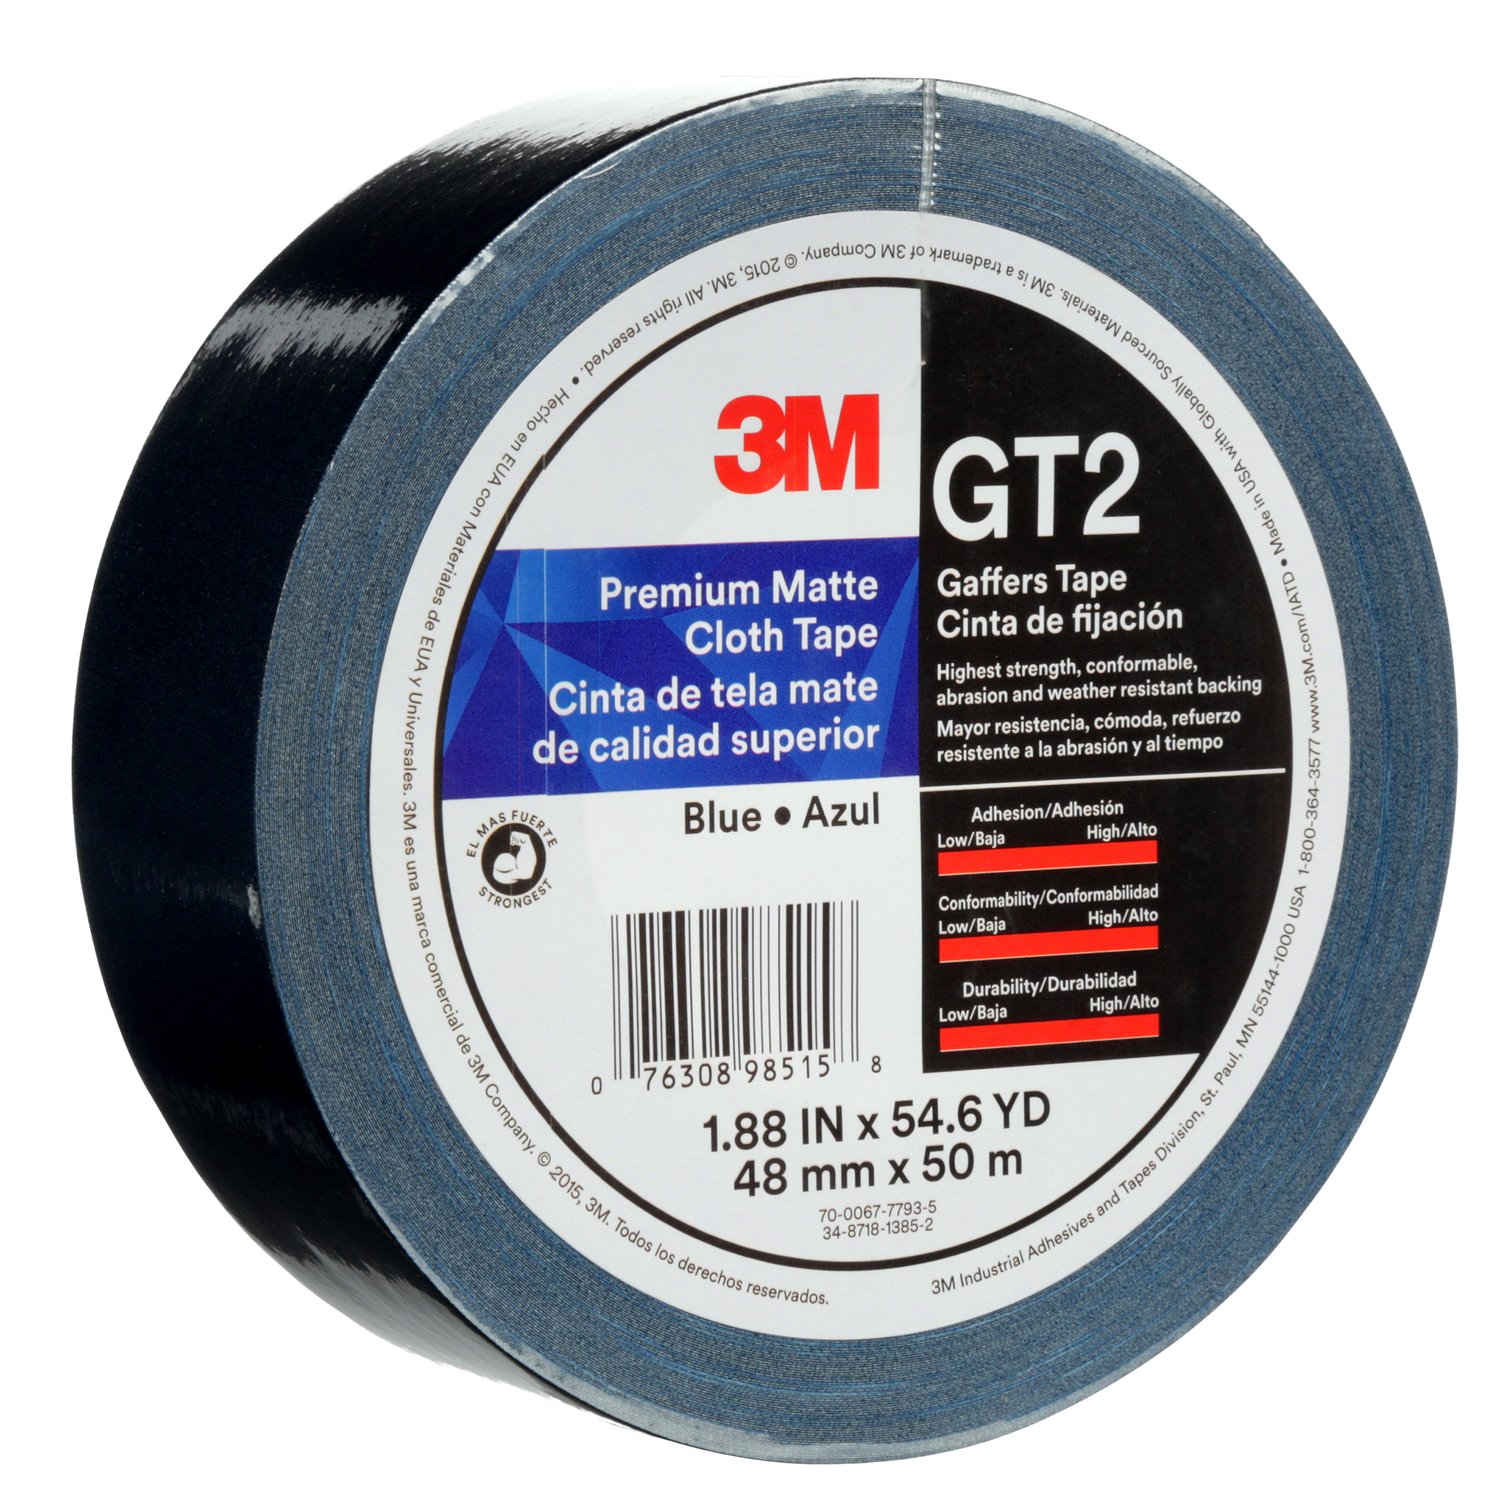 7010375515 - 3M Premium Matte Cloth (Gaffers) Tape GT2, Blue, 48 mm x 50 m, 11 mil,
24/Case